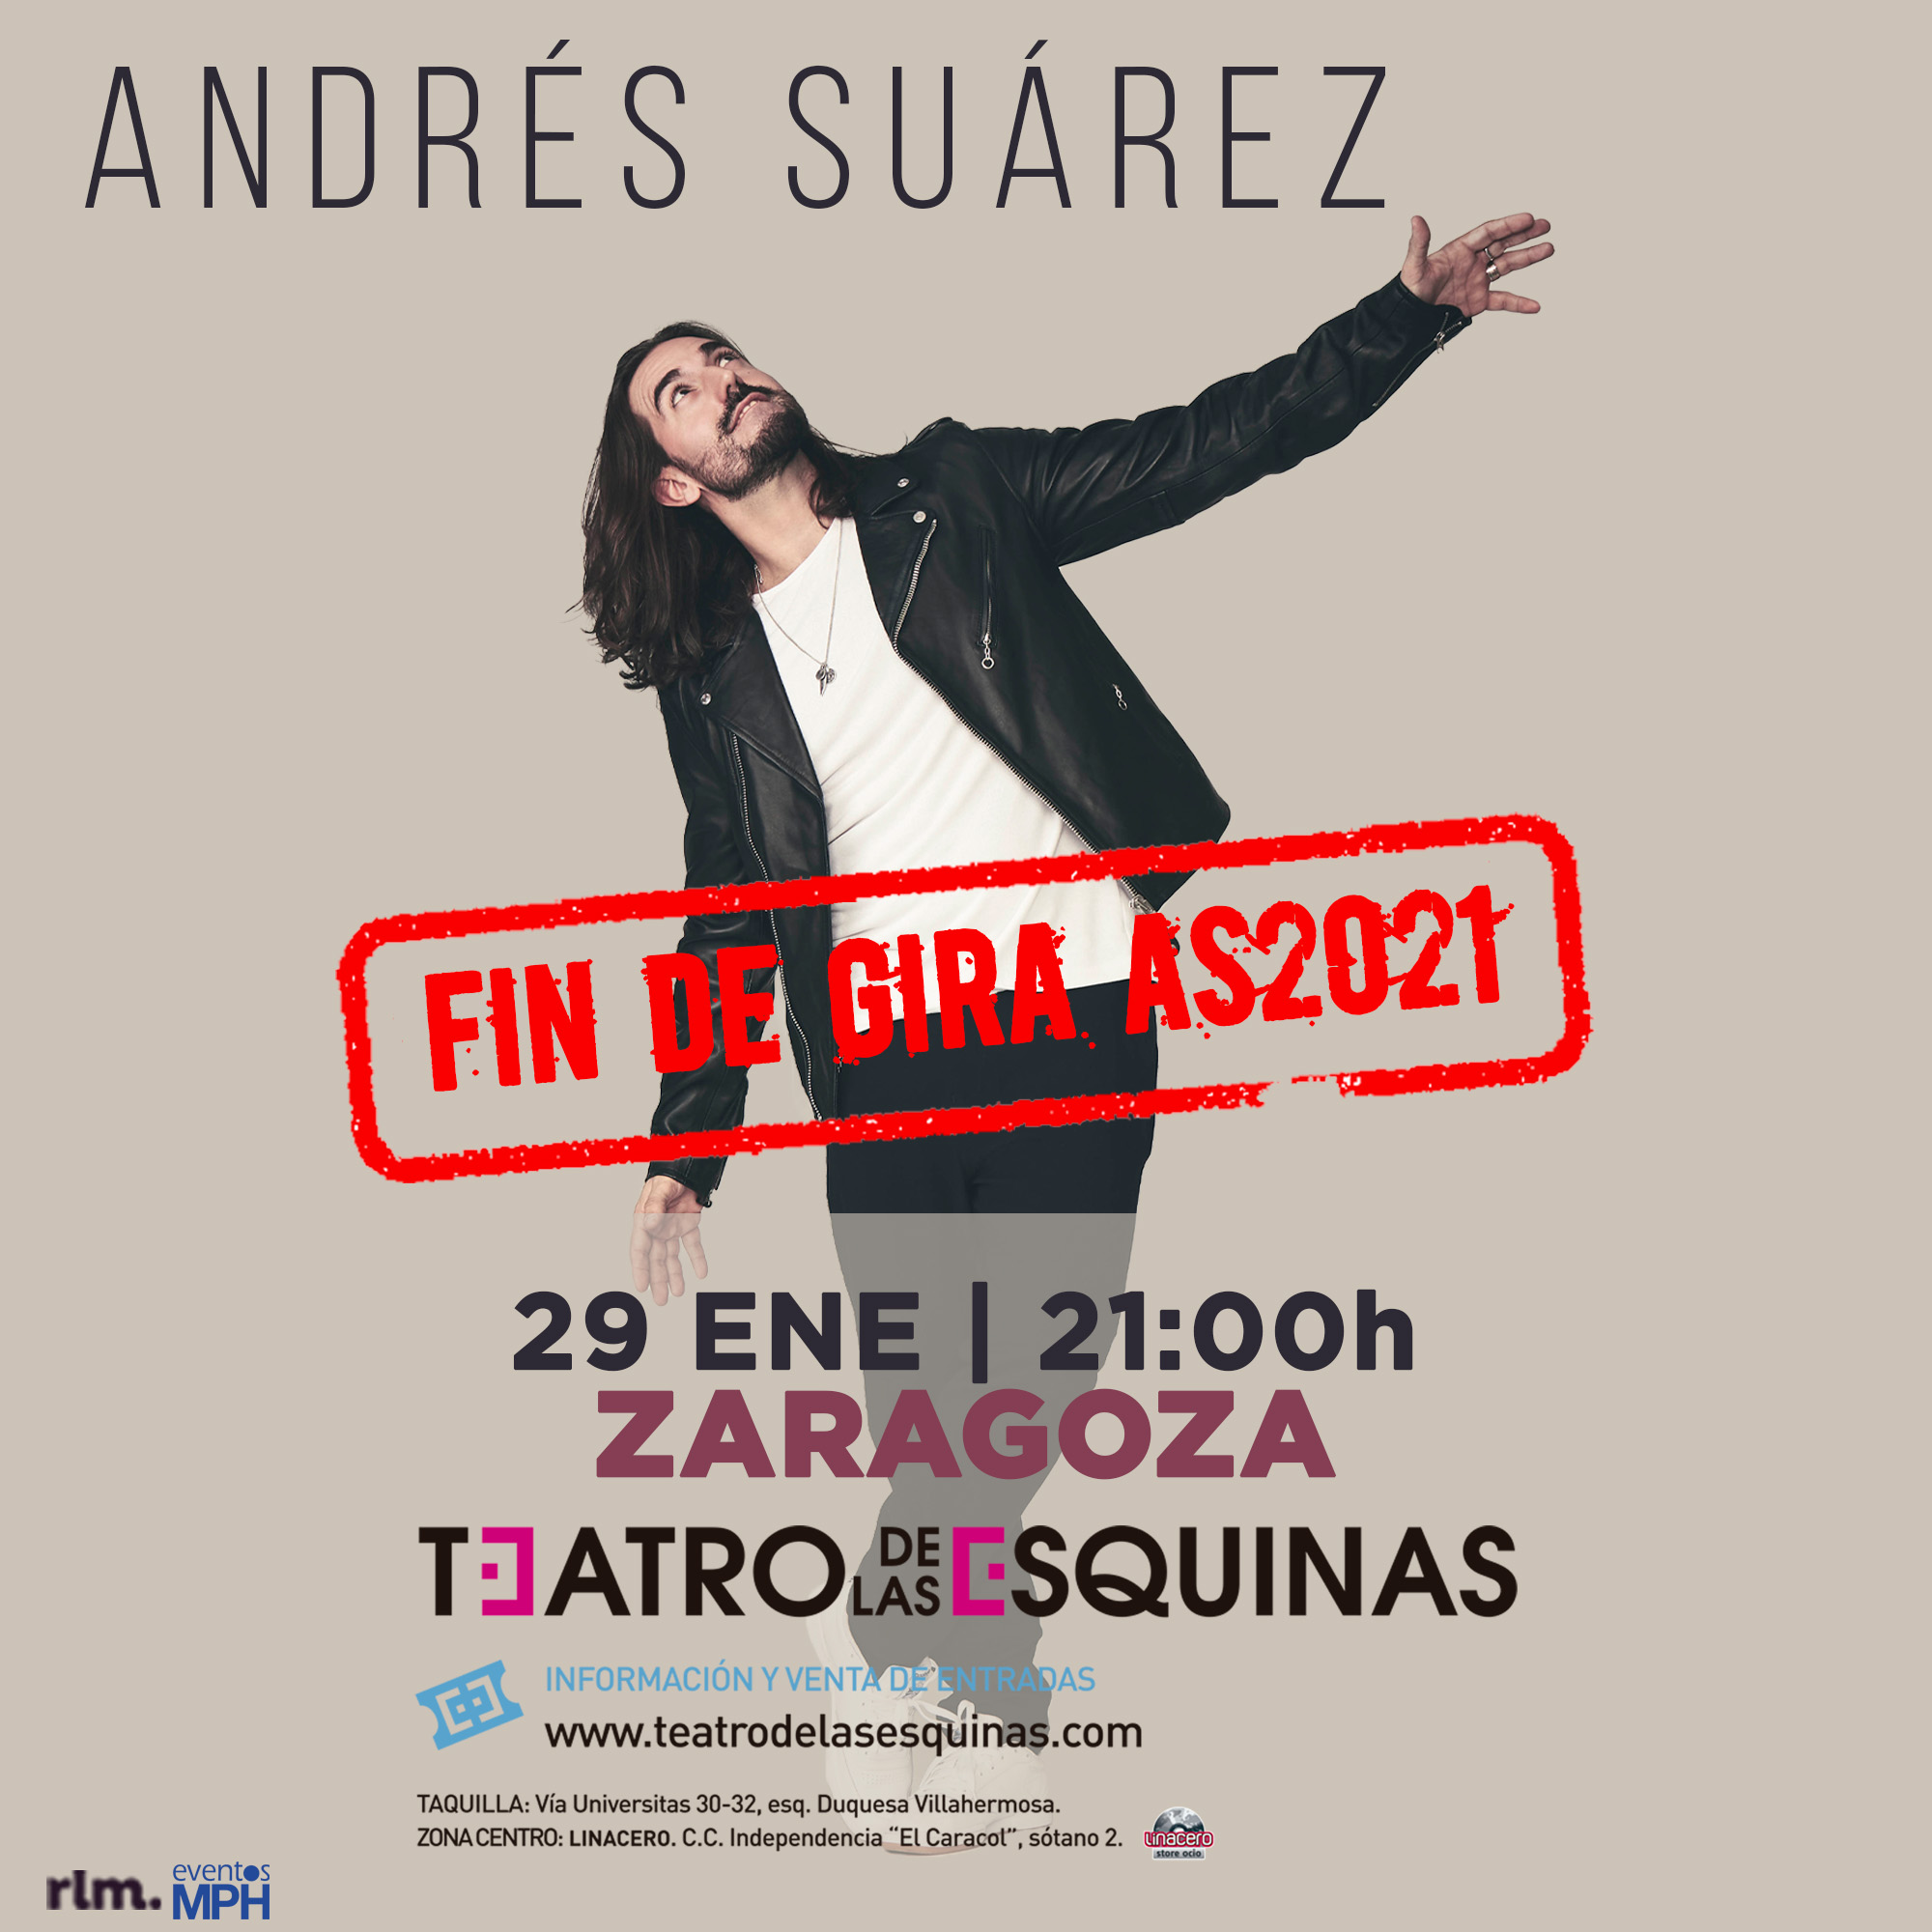 Cartel Andrés Suarez